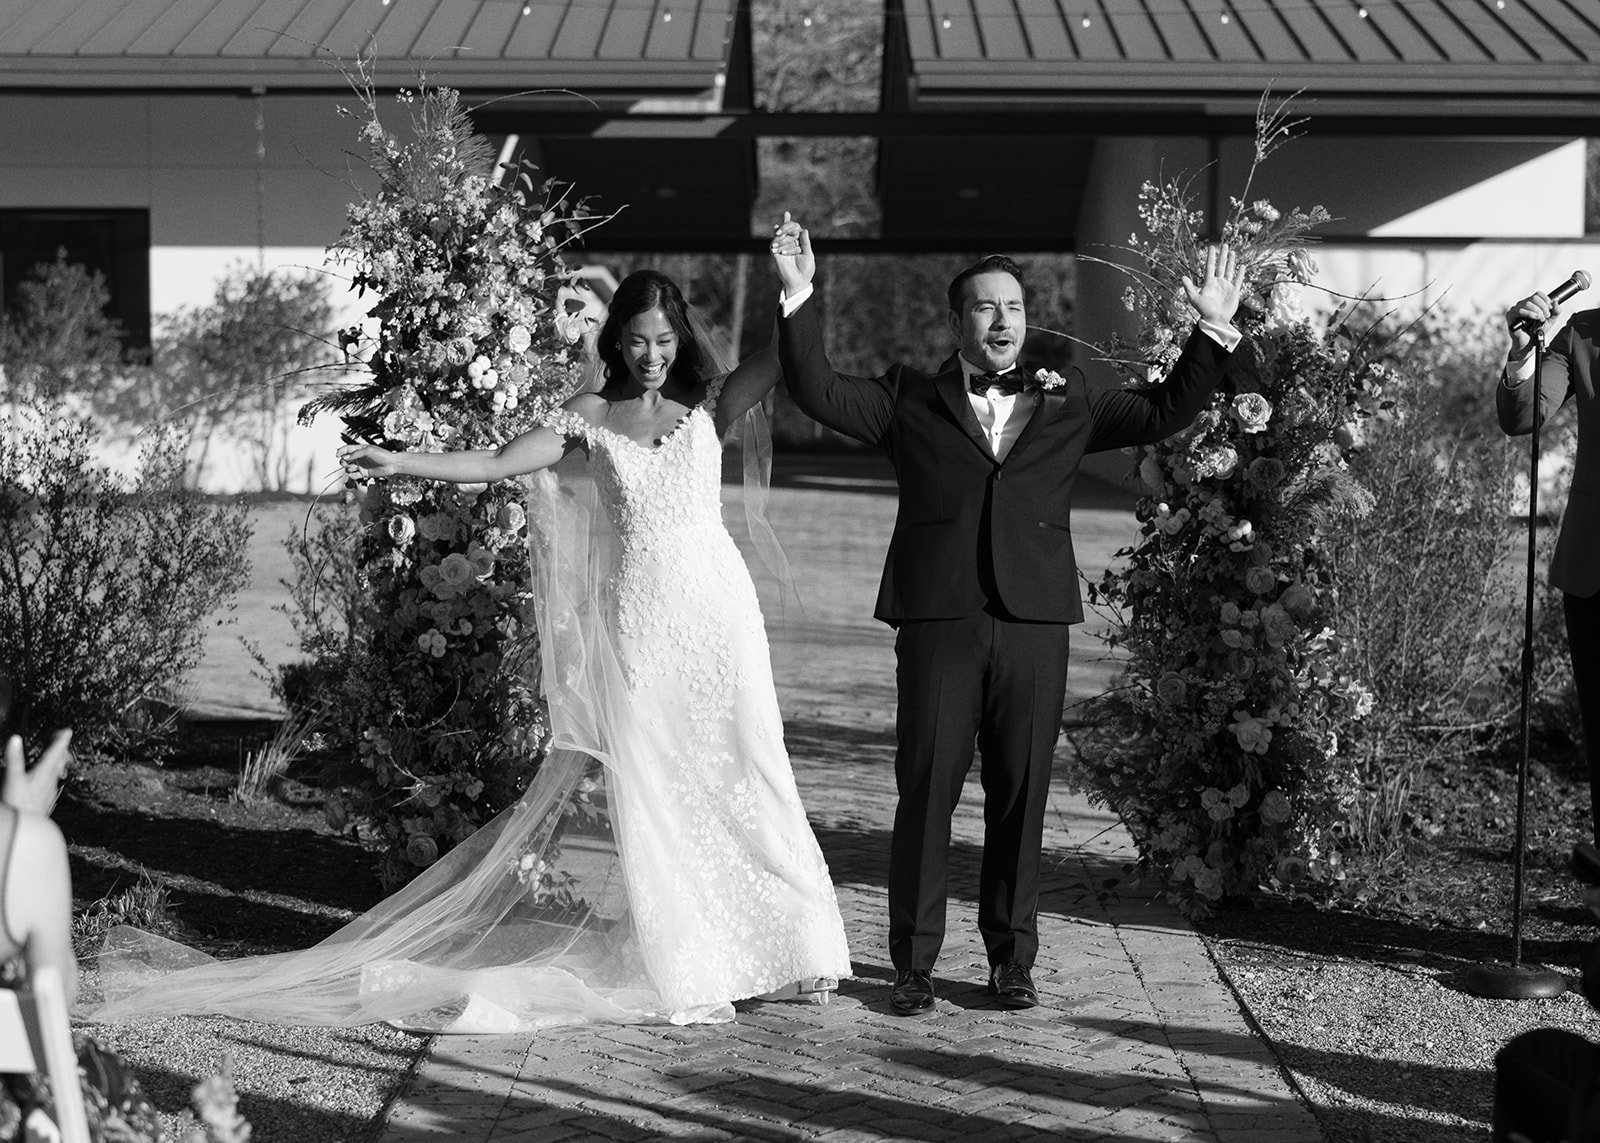 Best-Austin-Wedding-Photographers-Elopement-Film-35mm-Asheville-Santa-Barbara-Grand-Lady-120.jpg